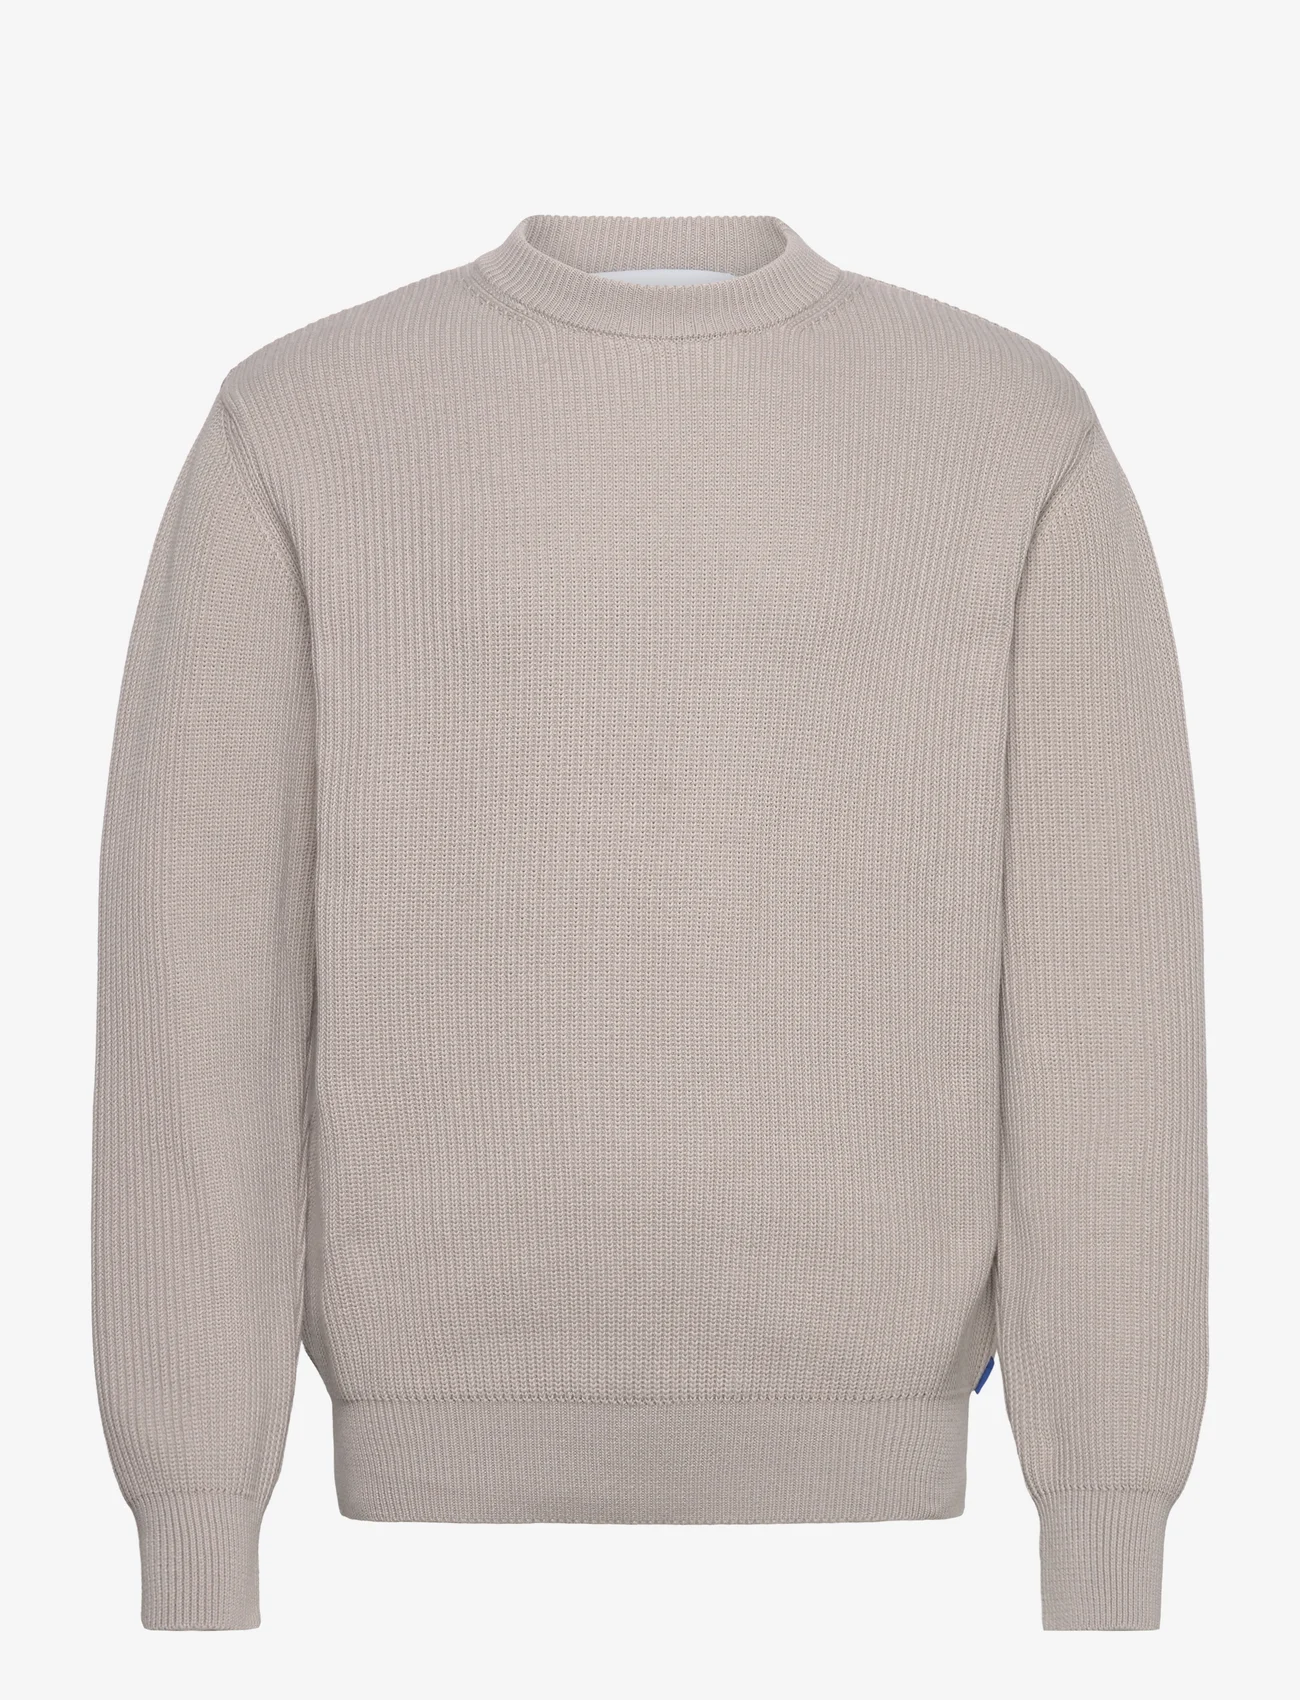 Garment Project - Round Neck Knit - Light Grey - adījumi ar apaļu kakla izgriezumu - light grey - 0